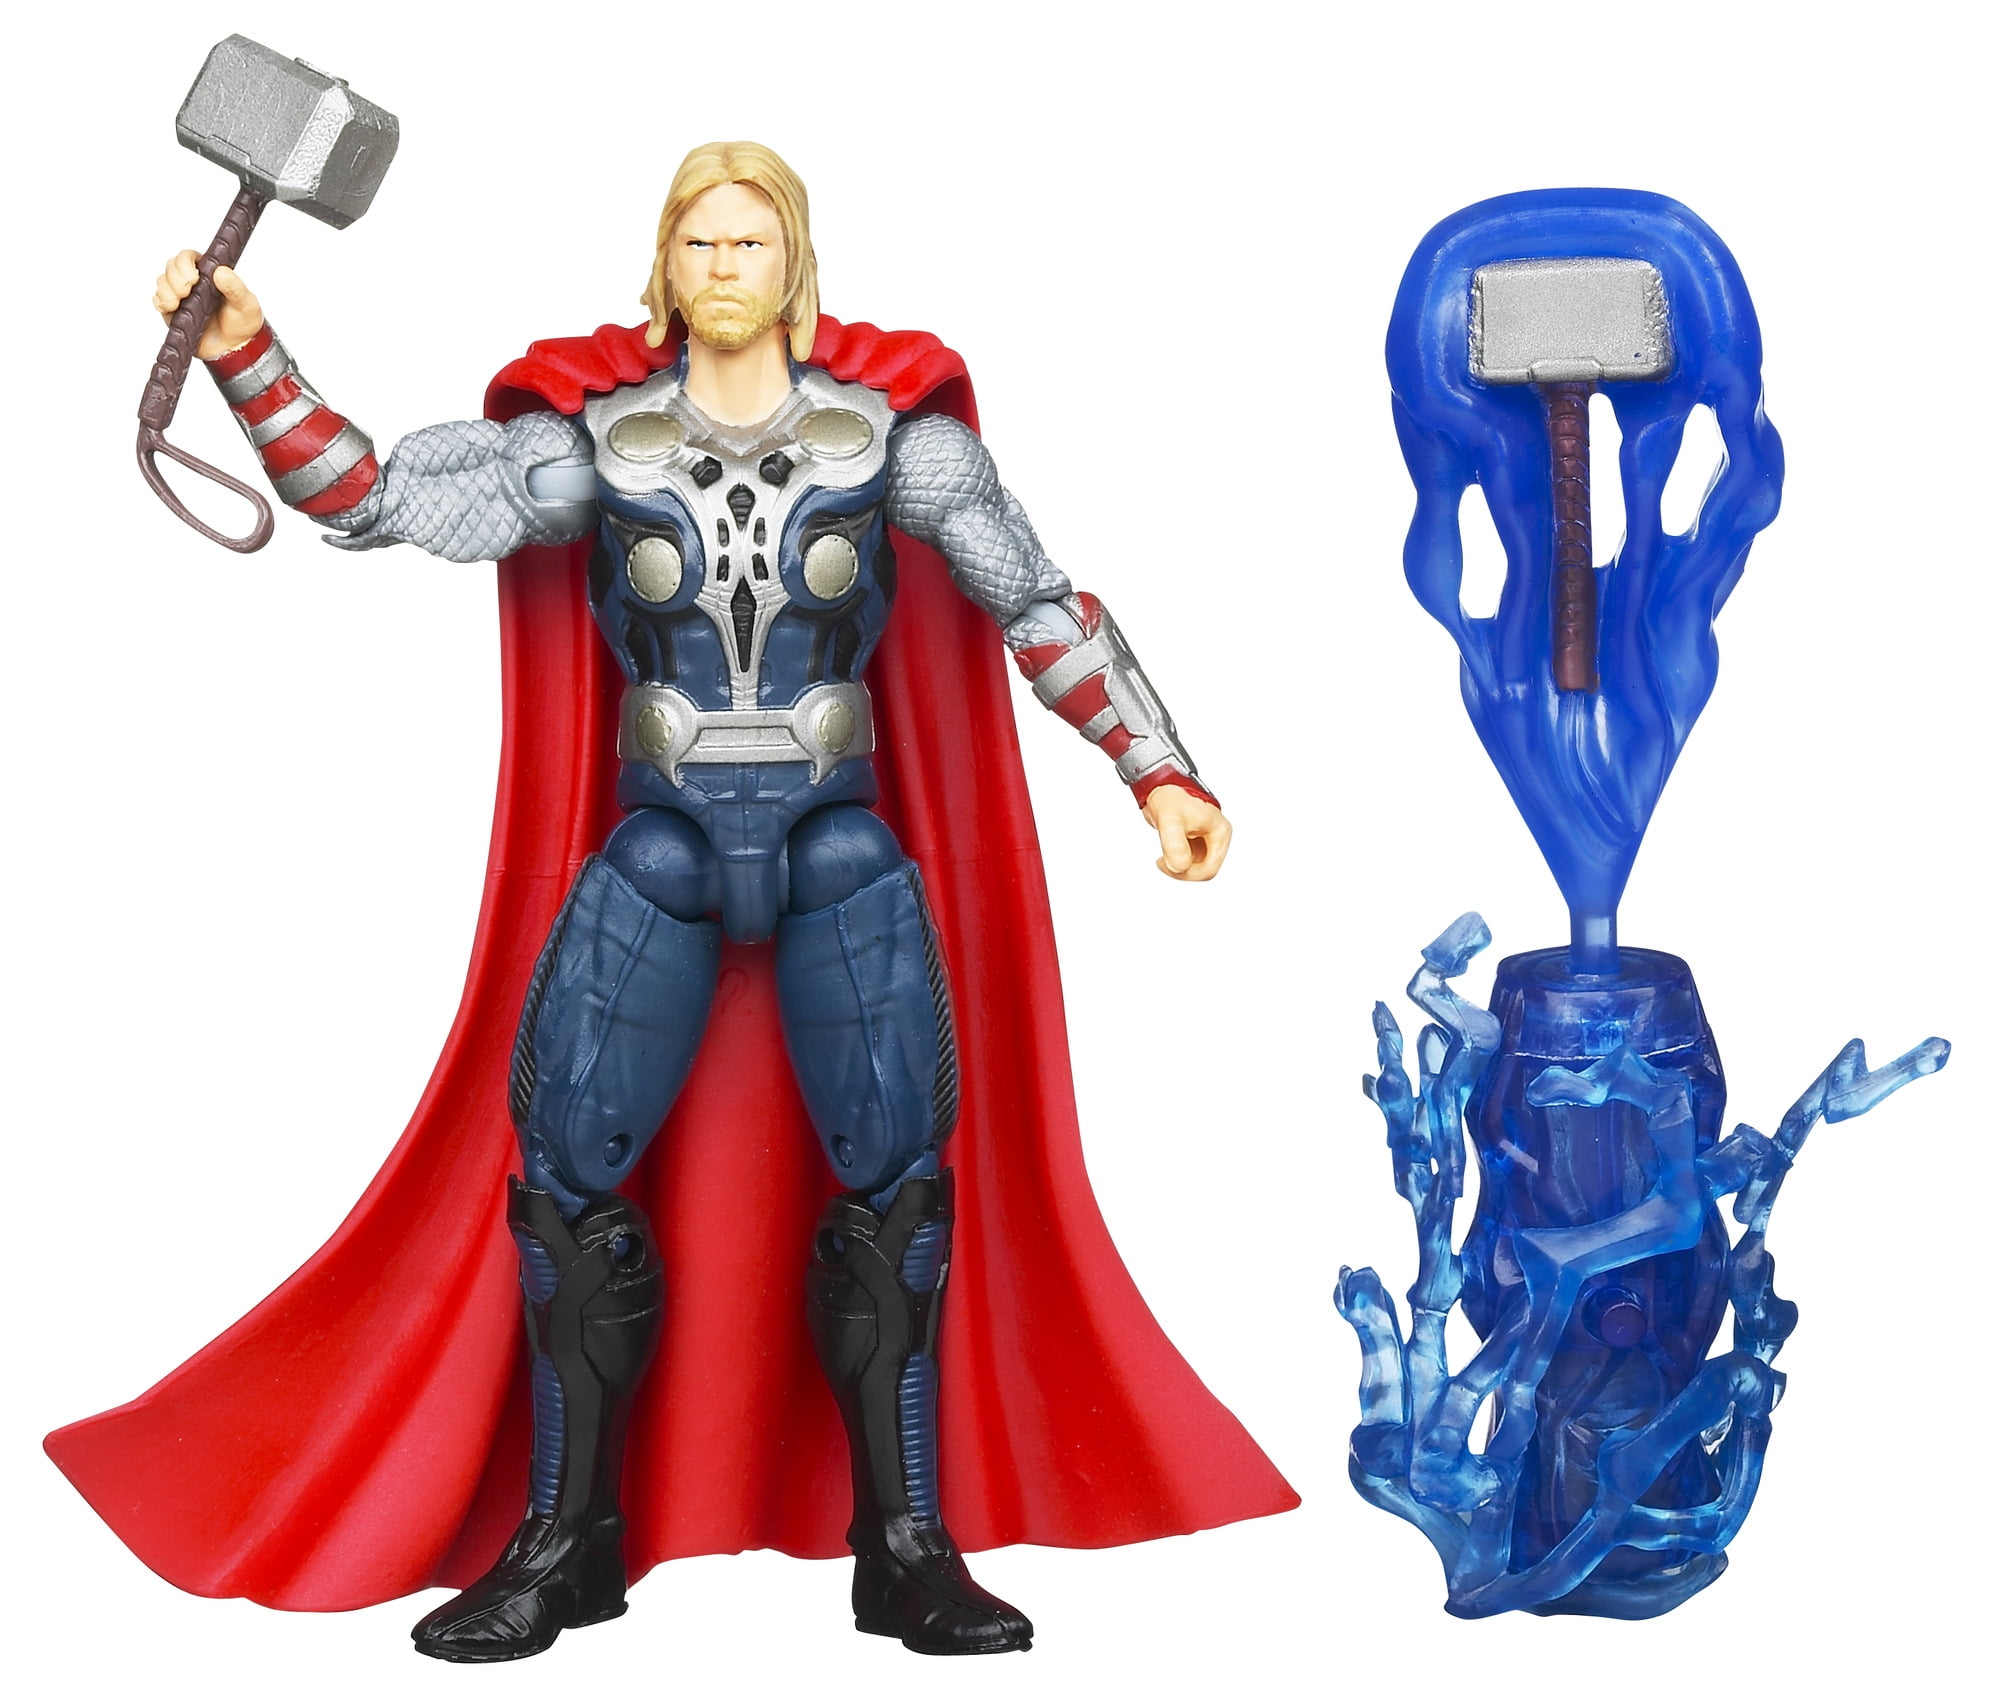 Marvel Thor The Mighty Avenger Fire Blast Destroyer 2010 Hasbro Figure R32 for sale online 